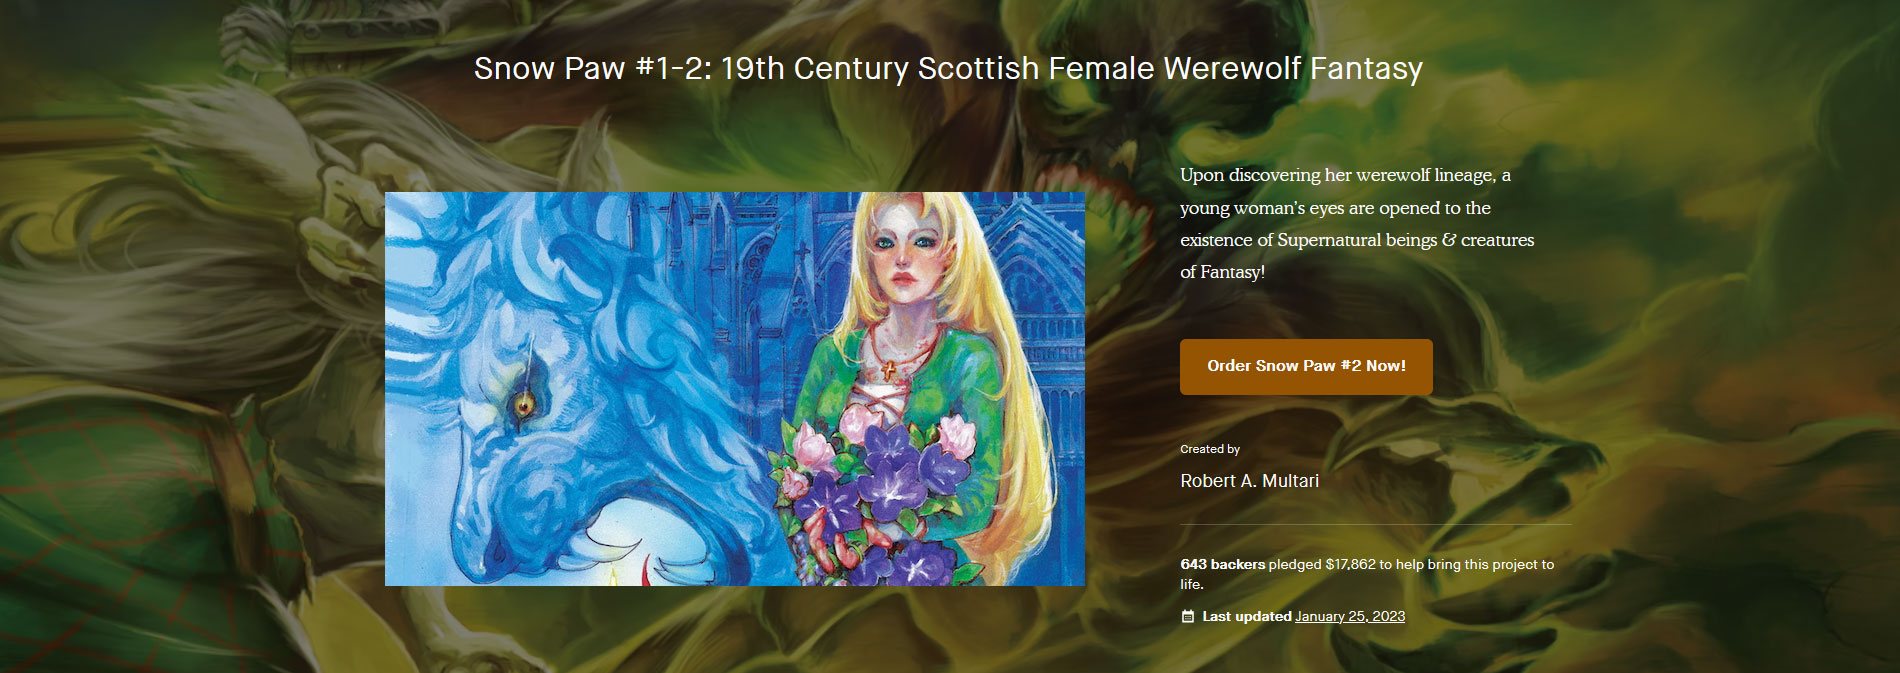 Snow Paw #1-2: A 19th Century Scottish Female Werewolf Fantasy